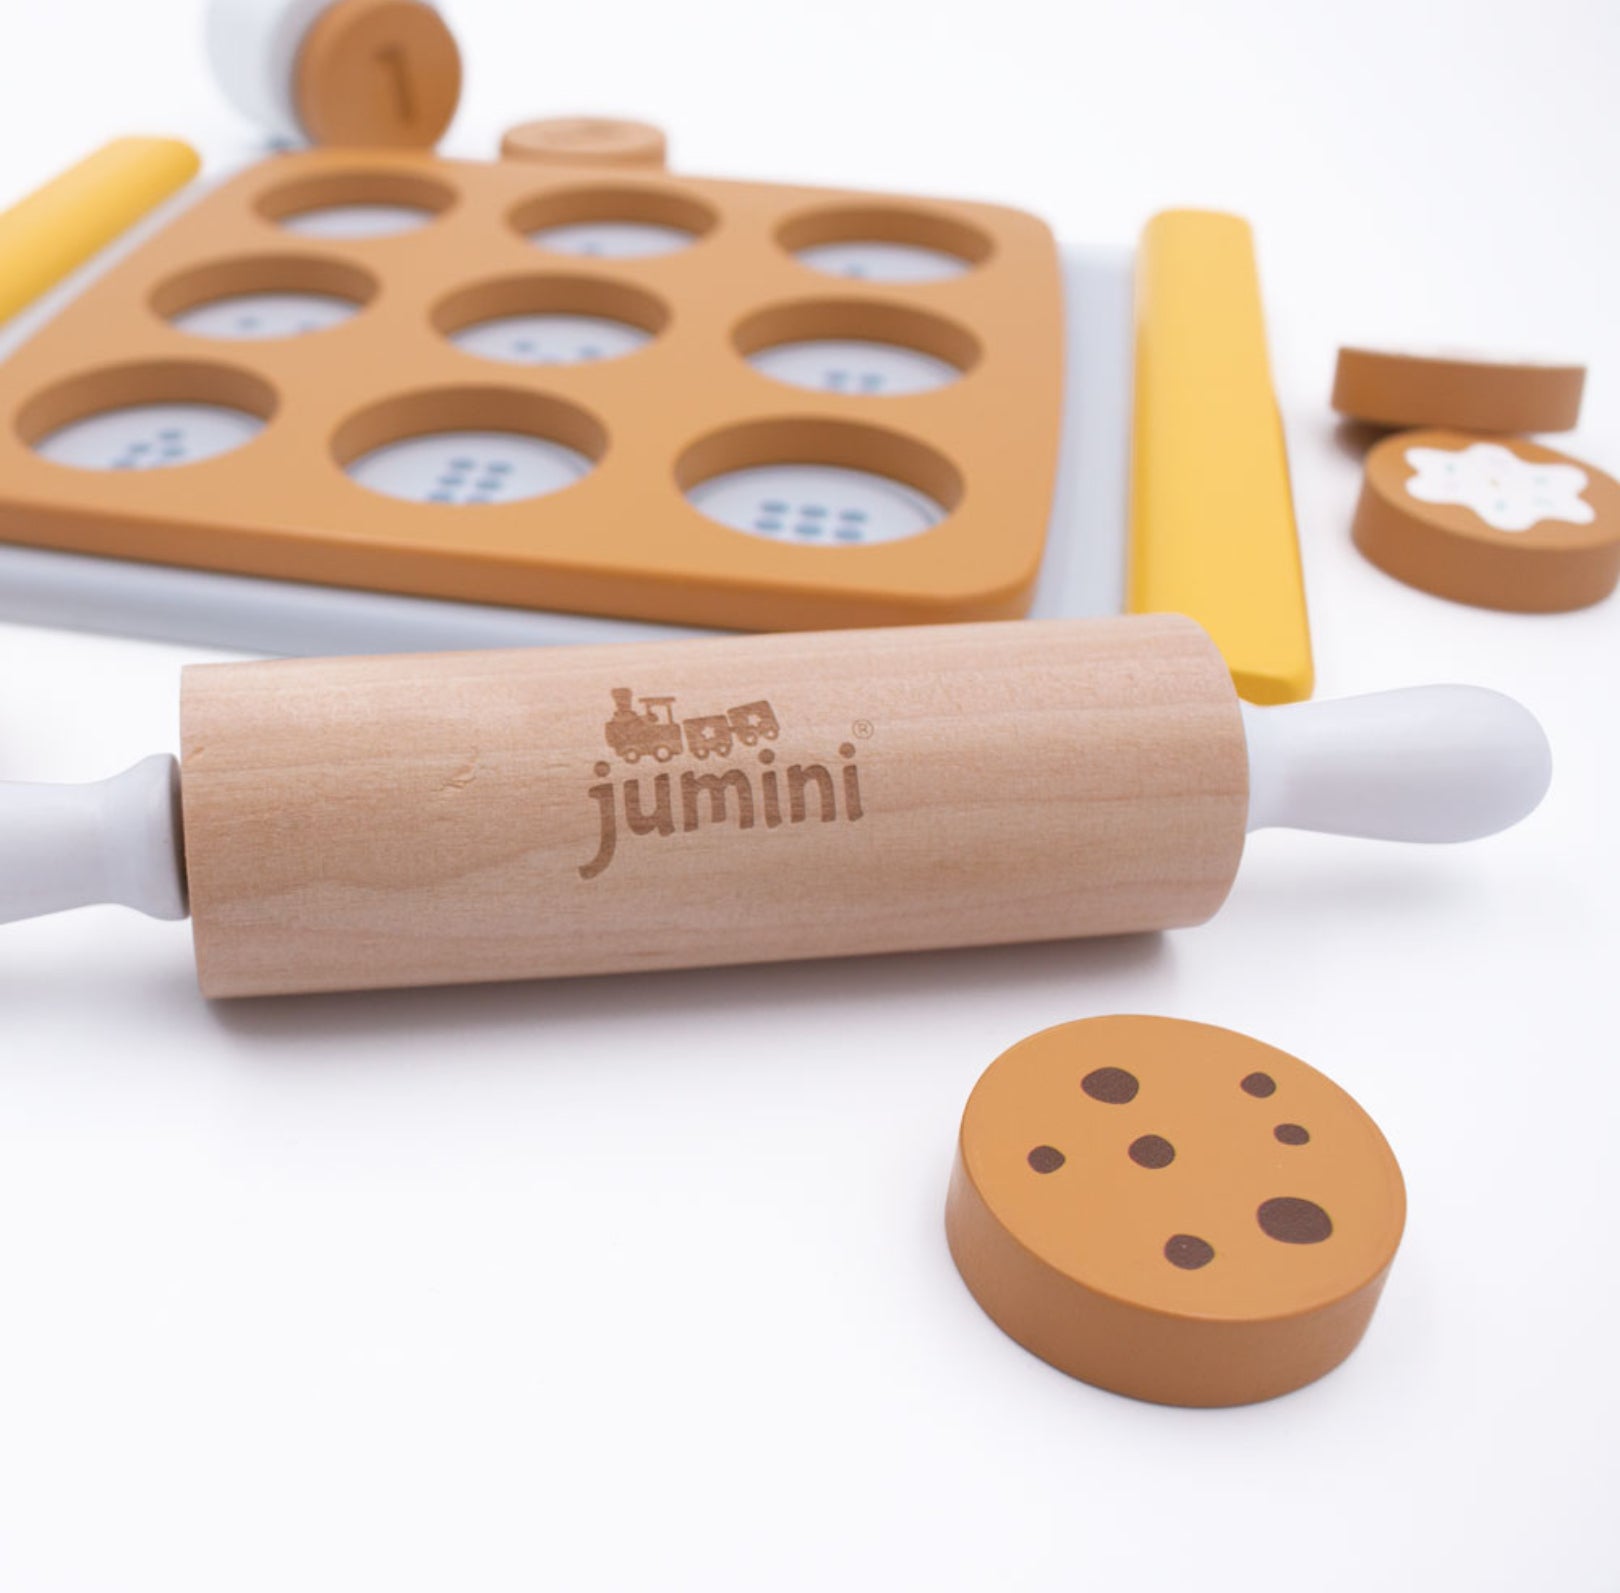 Jumini Wooden Play Baking Set